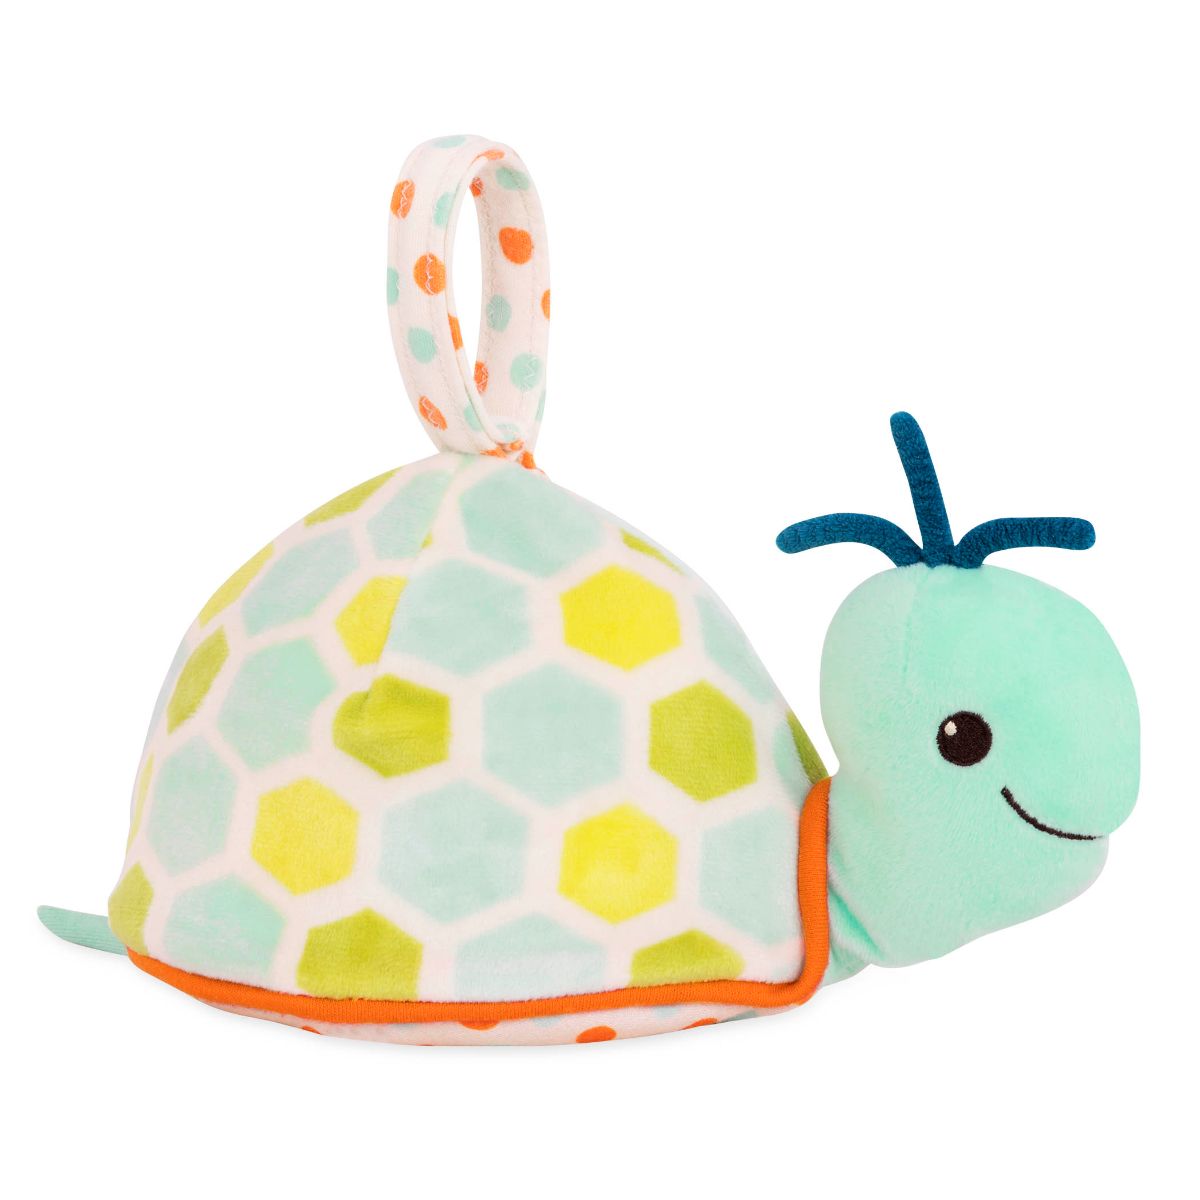 Bedtime turtle plushie